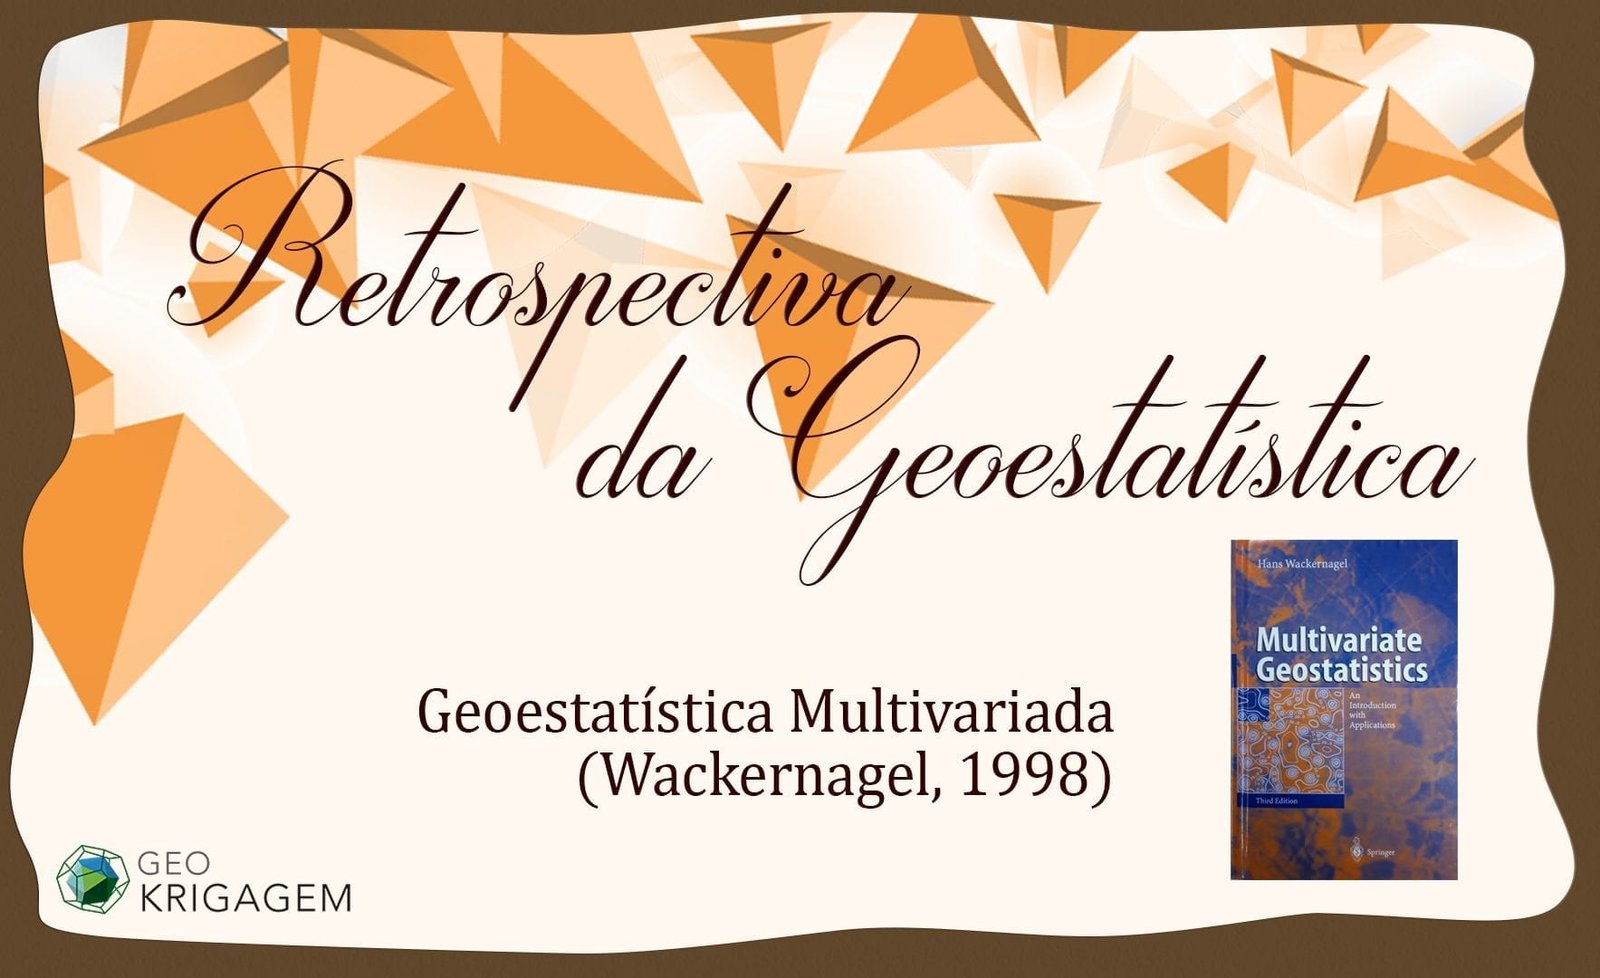 Geoestatística Multivariada - Retrospectiva da Geoestatistia, Geokrigagem